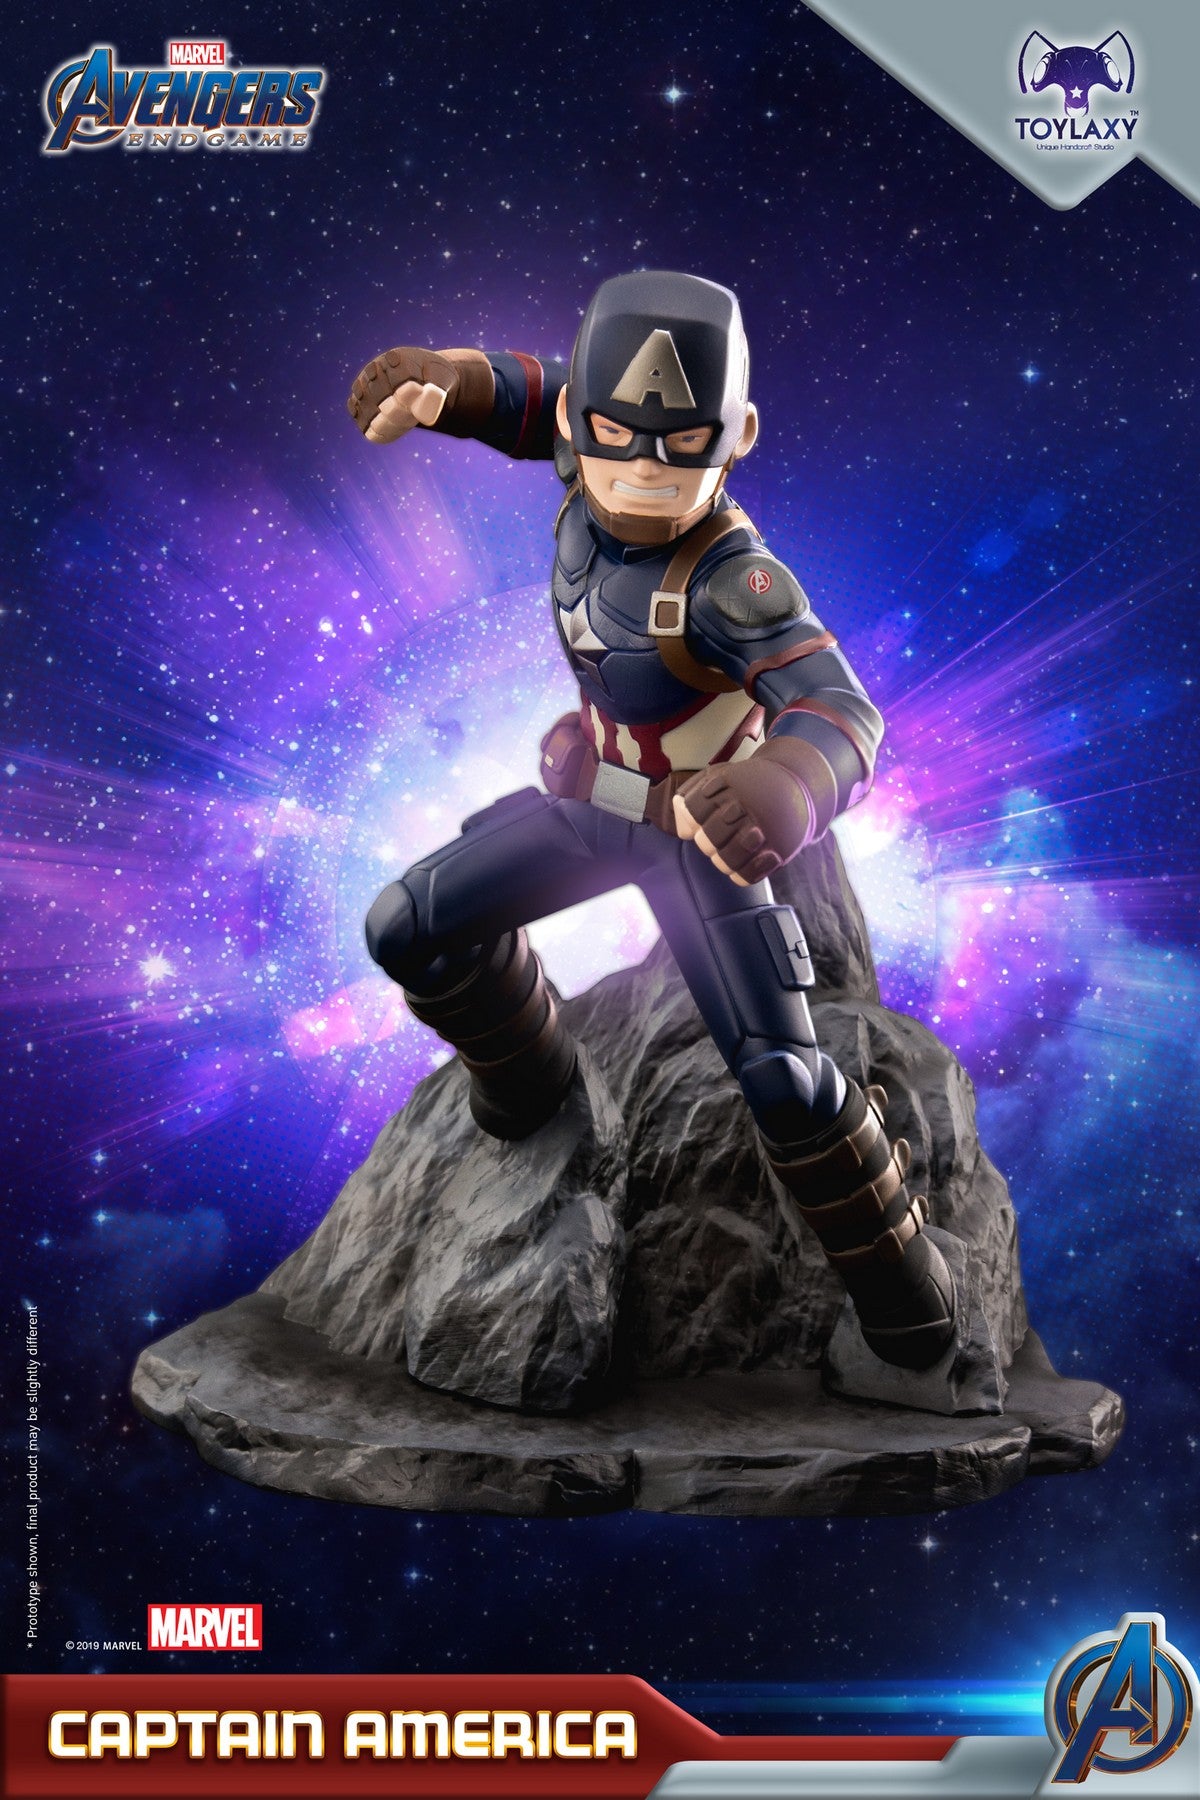 漫威復仇者聯盟：美國隊長正版模型手辦人偶玩具 Marvel's Avengers: Endgame Premium PVC Captain America official figure toy wave 1 front